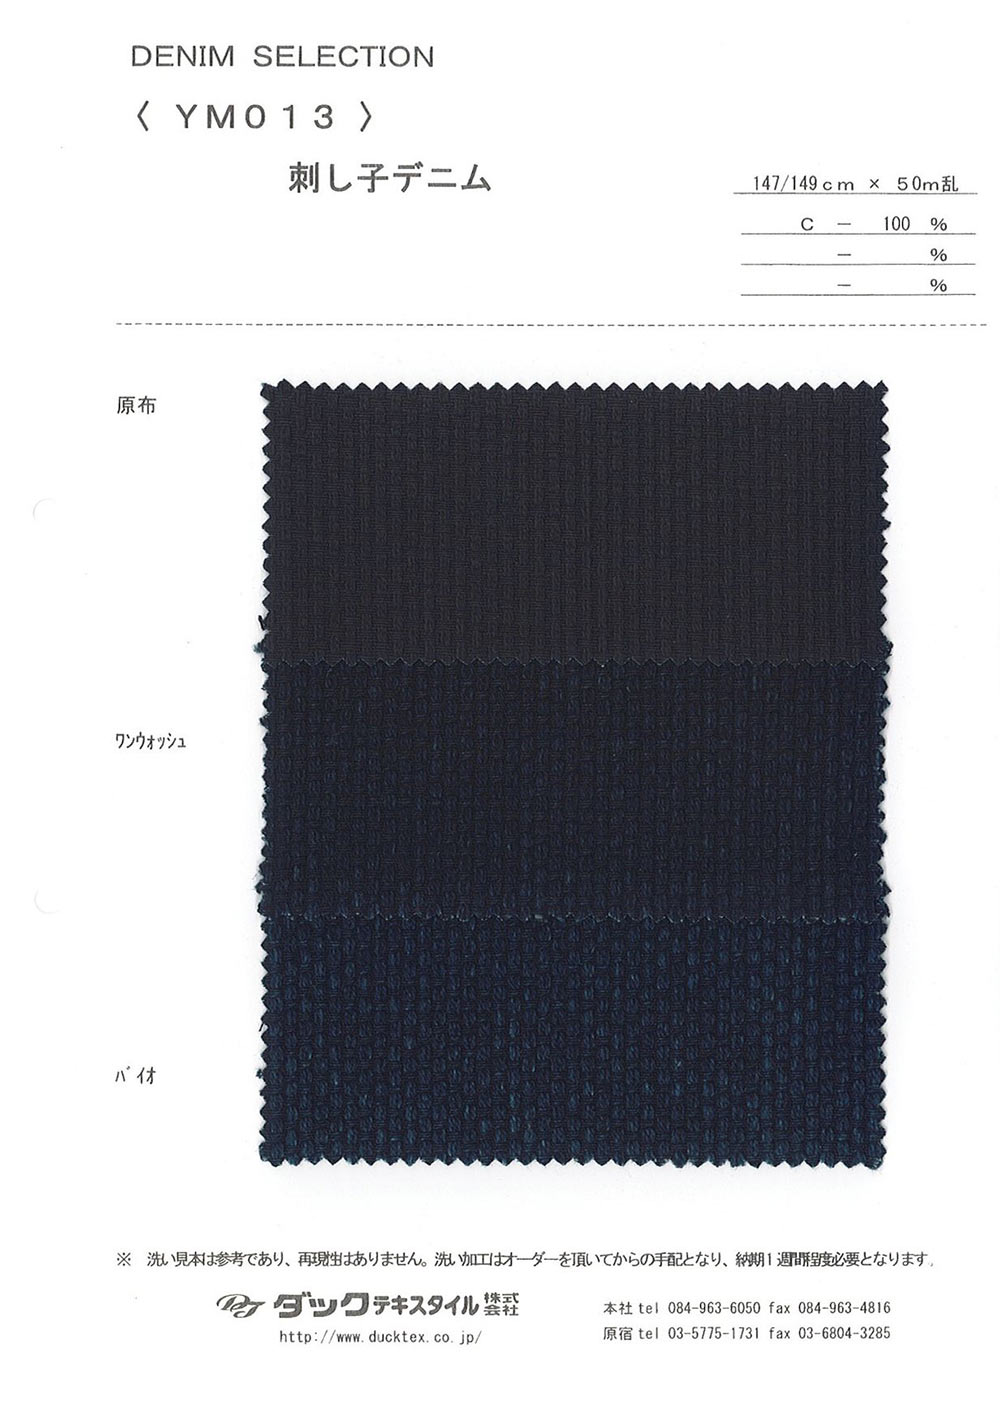 YM013 Jean Sashiko[Fabrication De Textile] DUCK TEXTILE